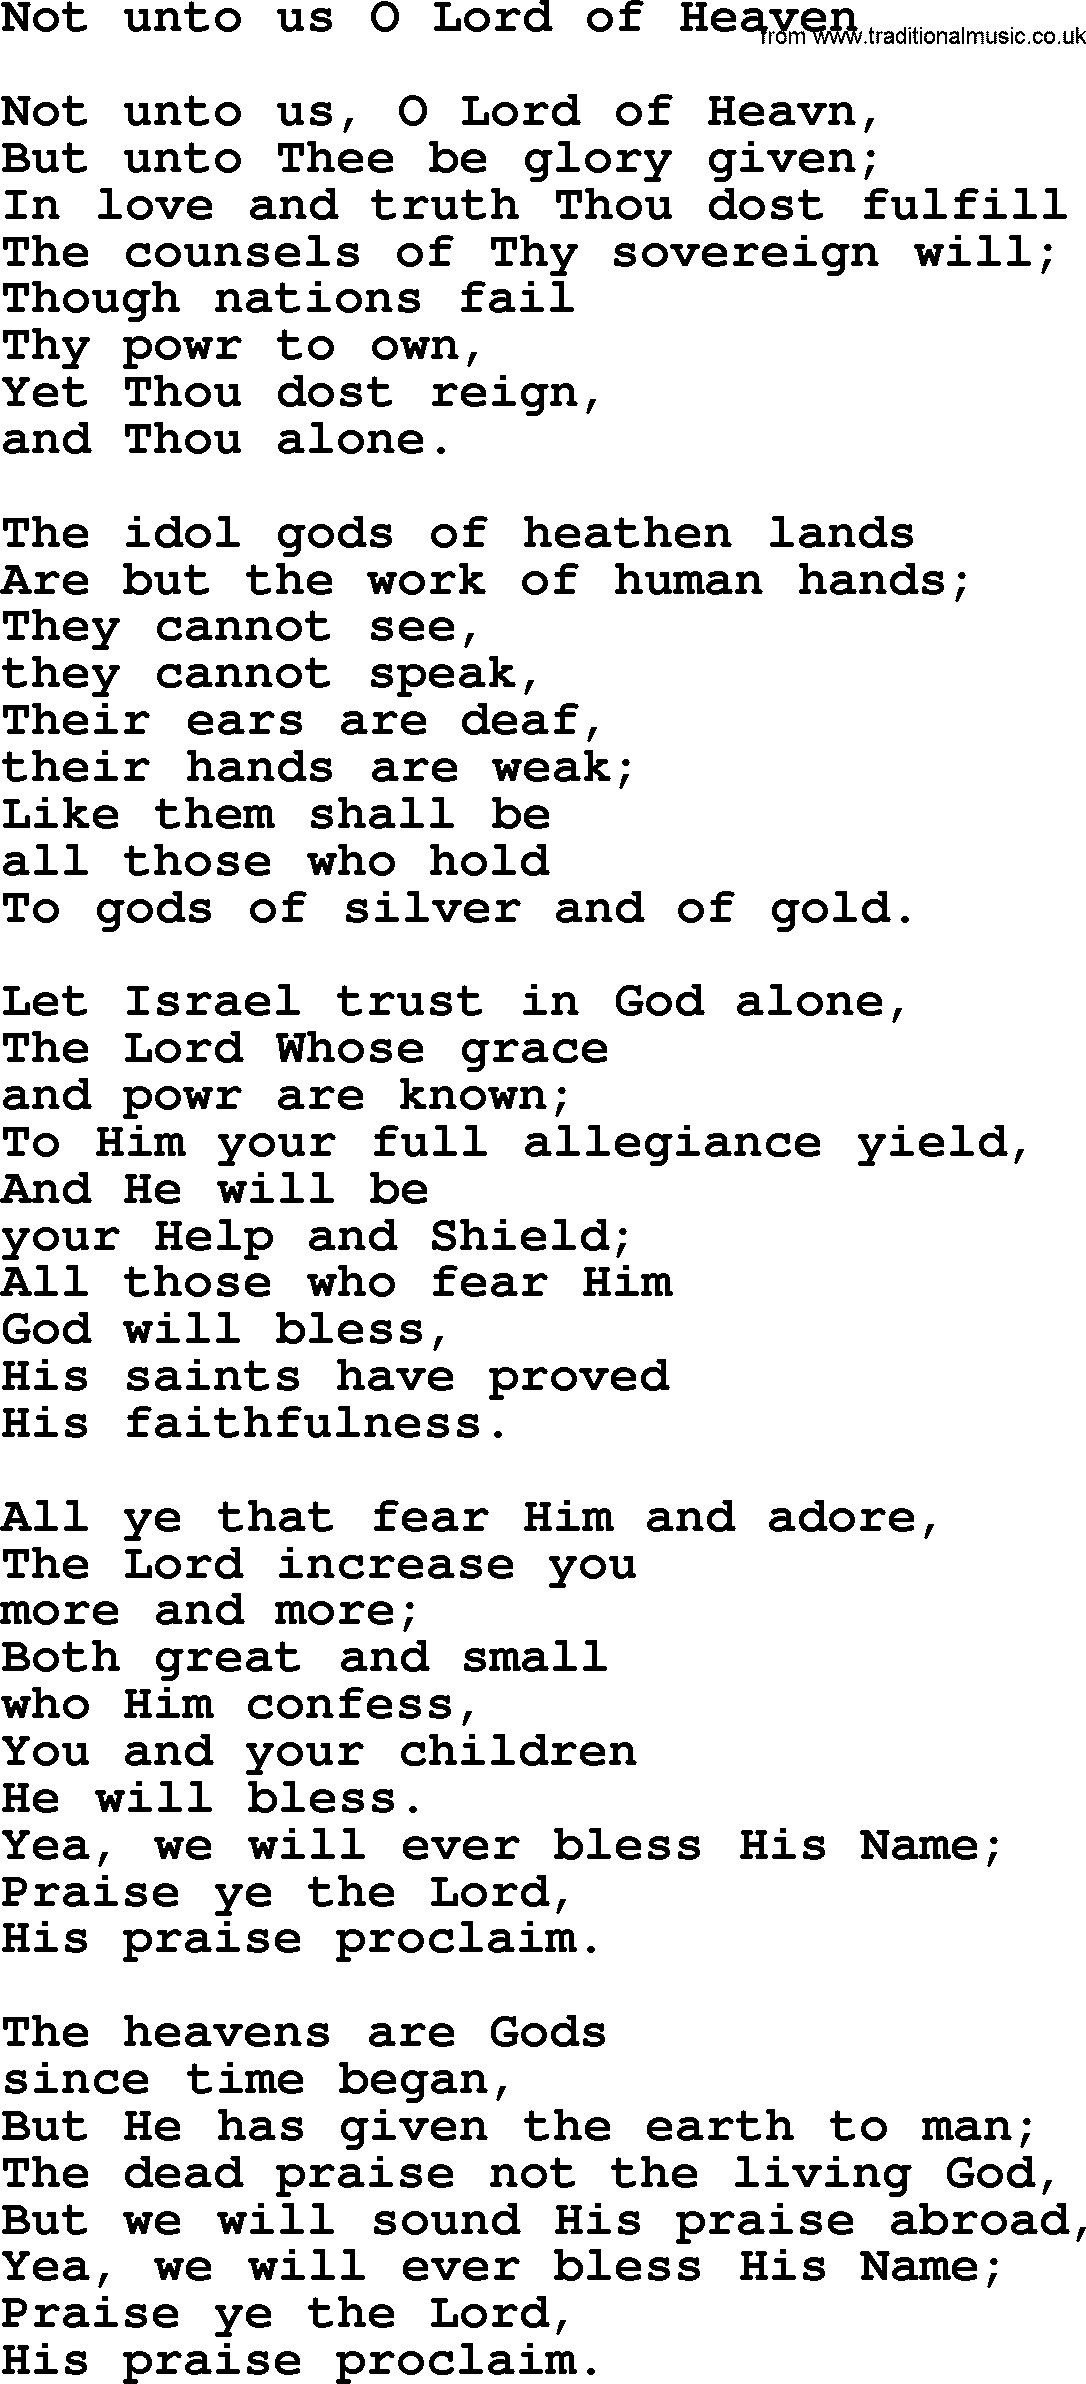 Presbyterian Hymns collection, Hymn: Not Unto Us O Lord Of Heaven, lyrics and PDF